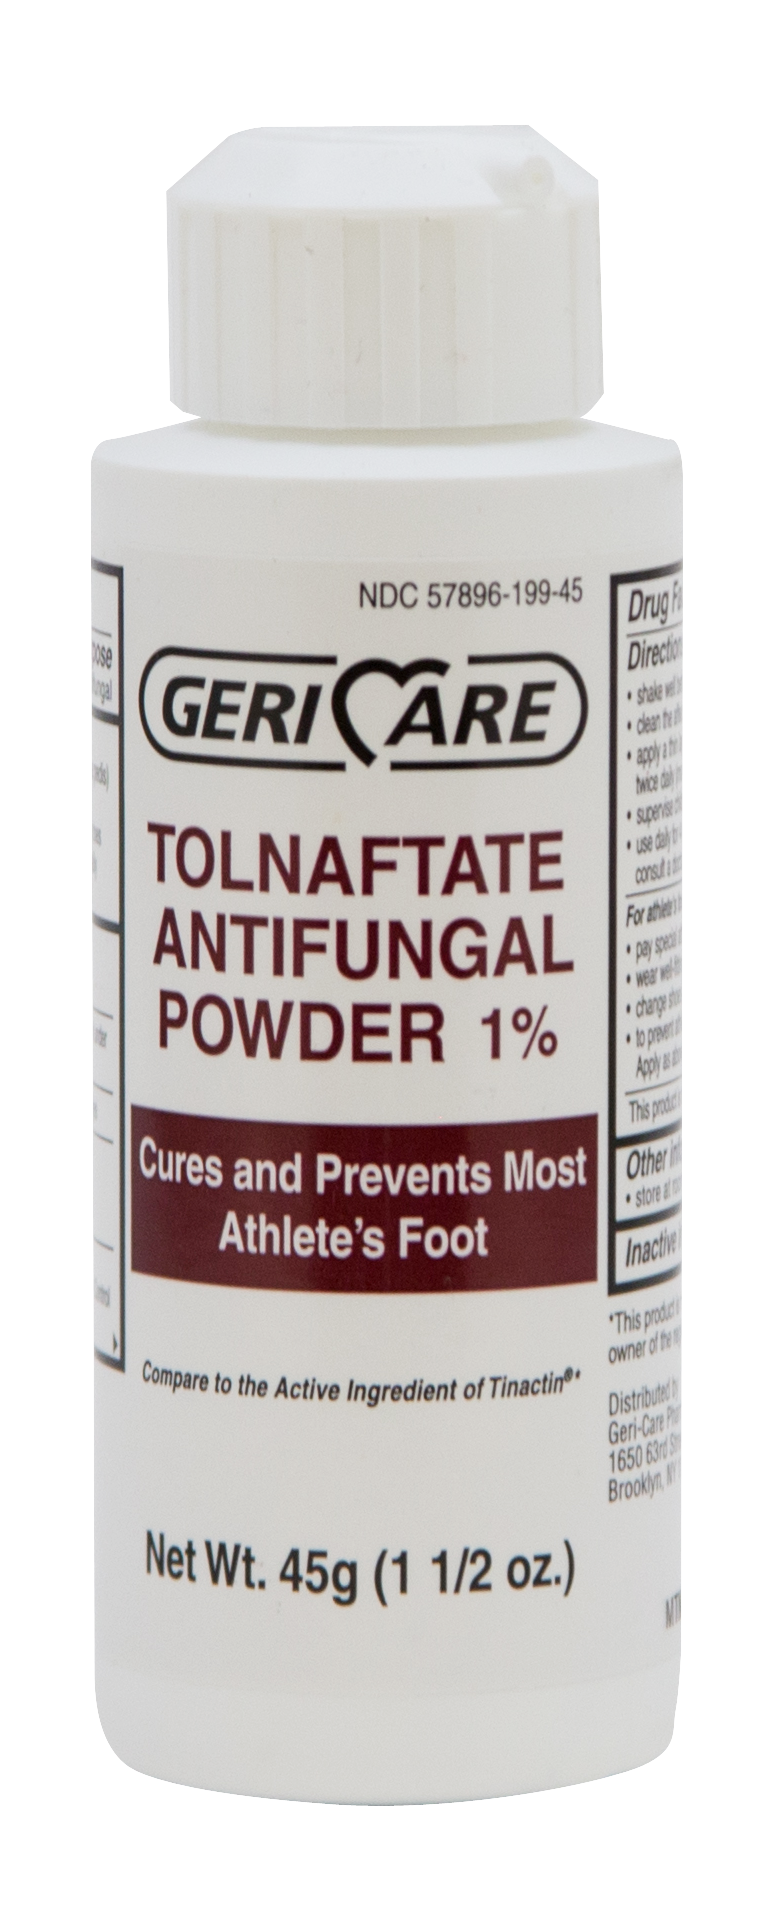 Tolnaftate Antifungal Powder